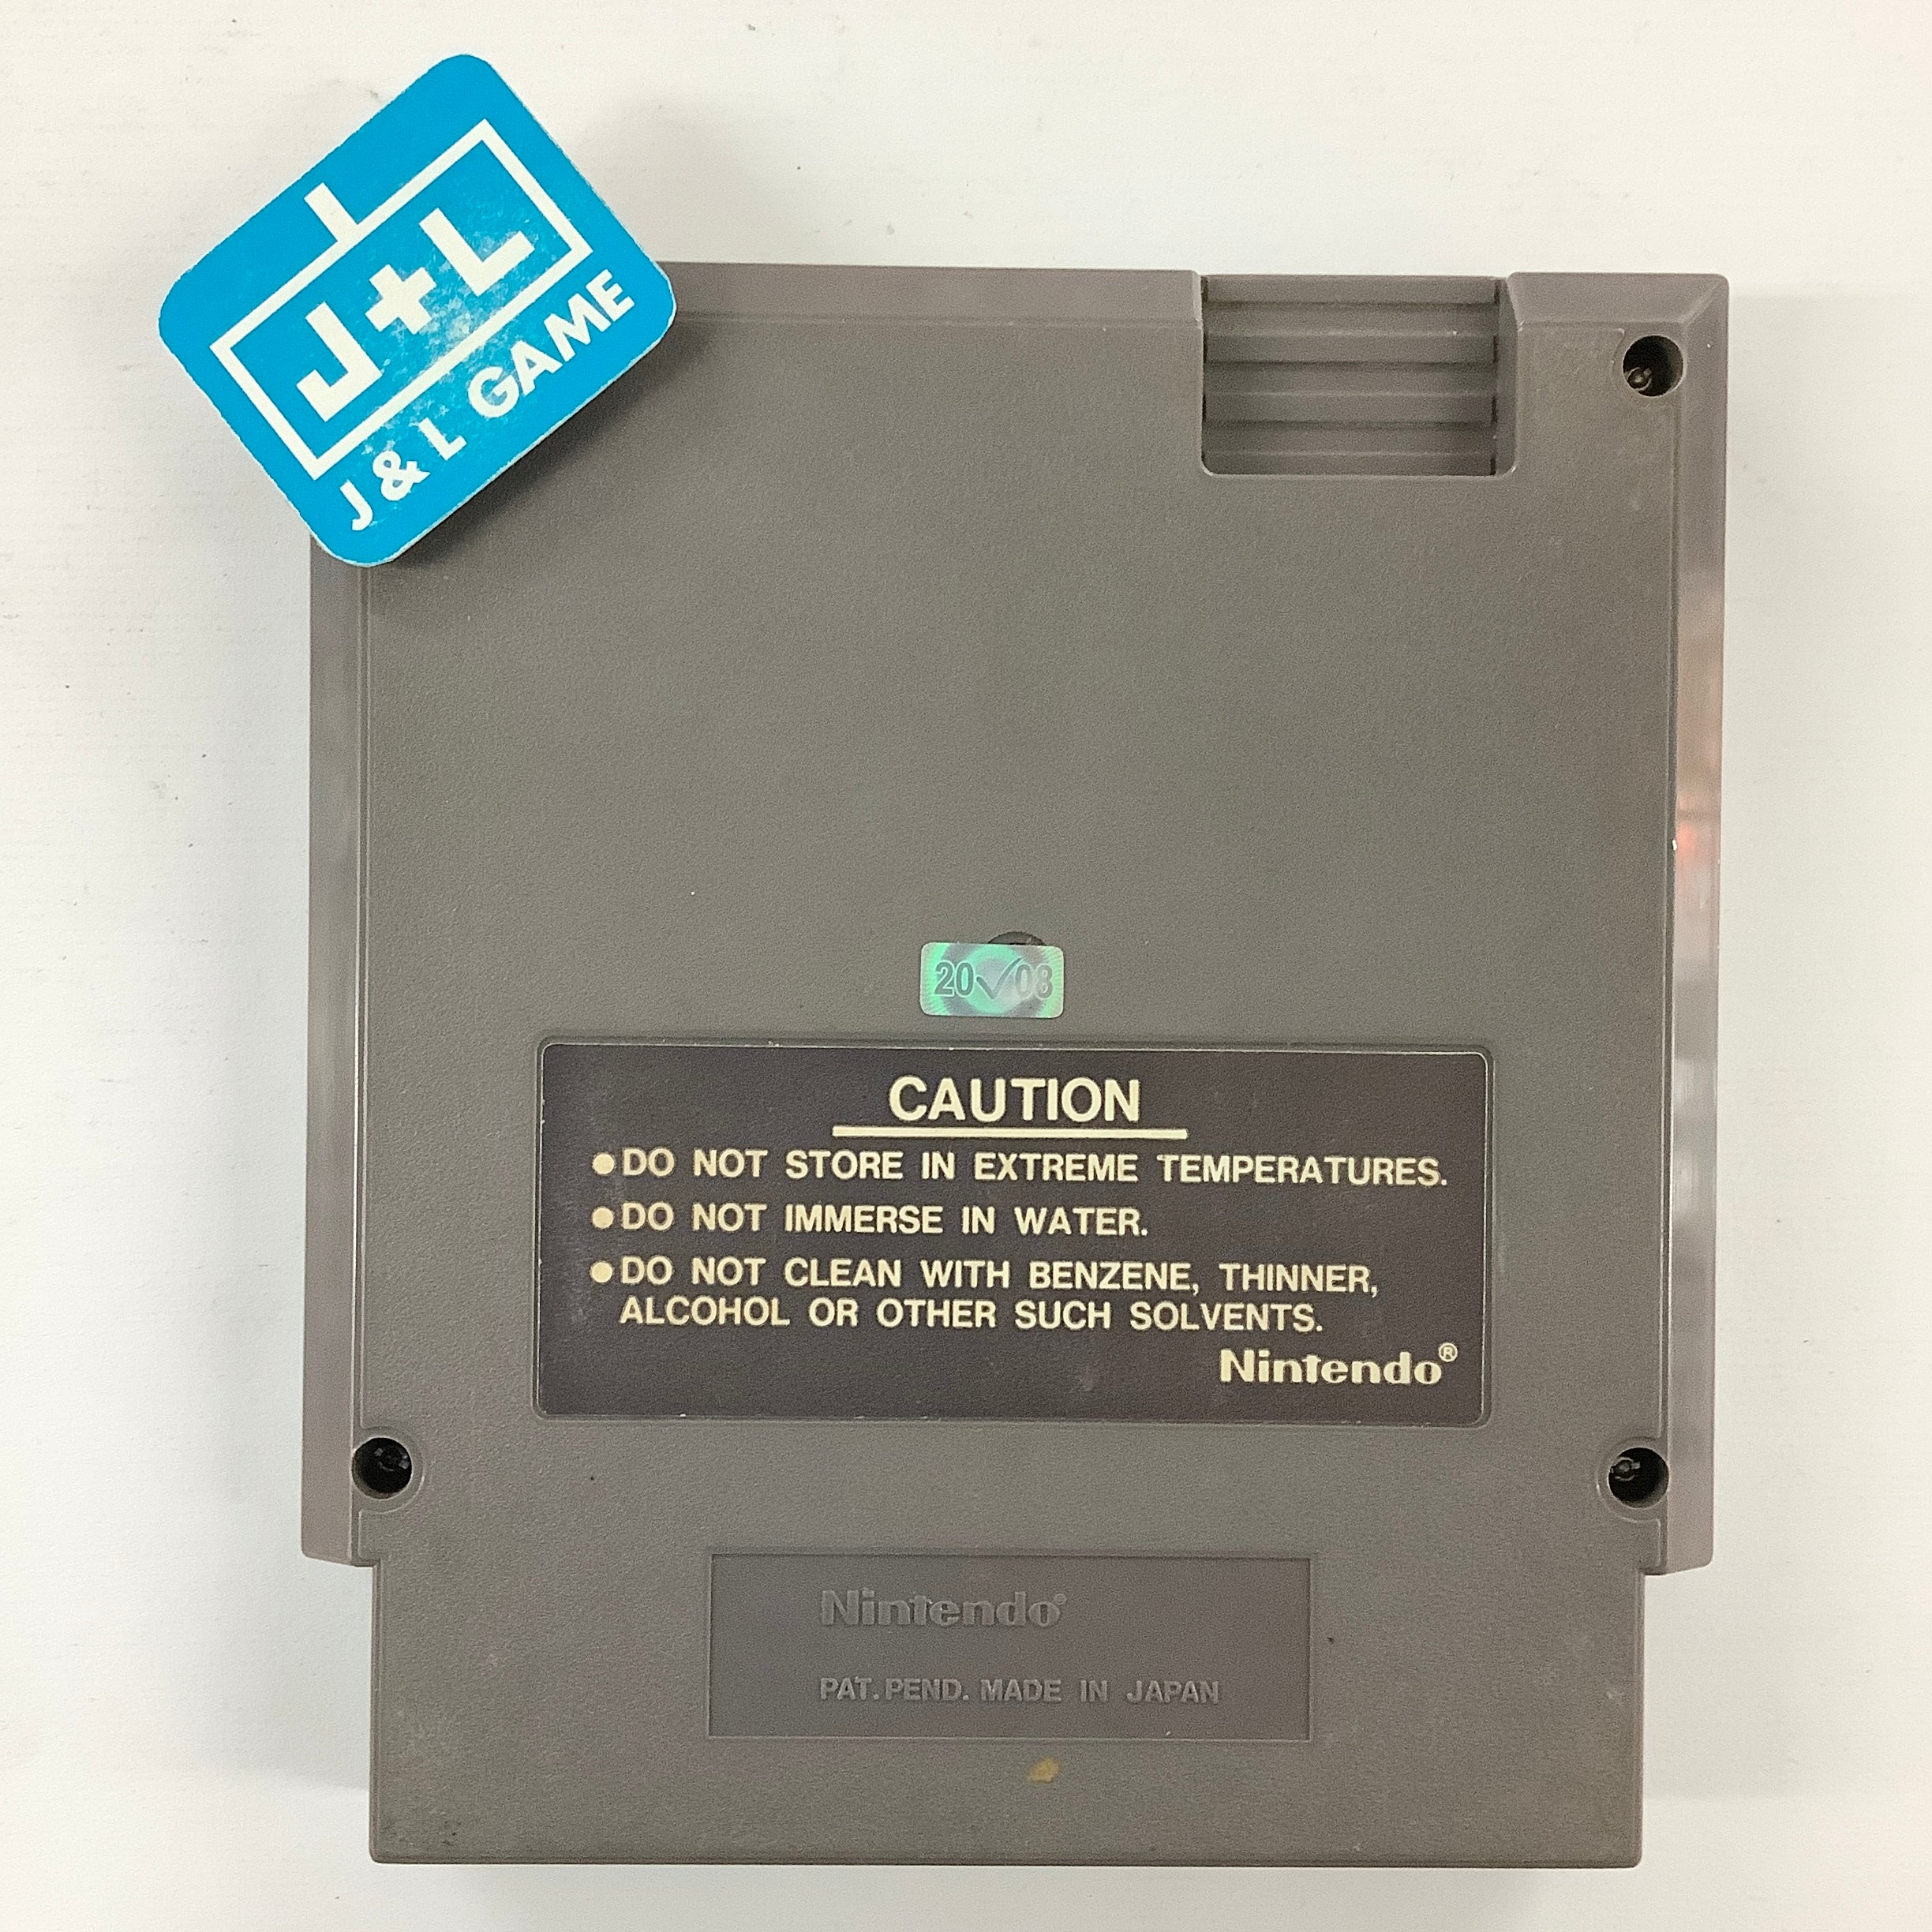 Wrecking Crew - (NES) Nintendo Entertainment System [Pre-Owned] Video Games Nintendo   